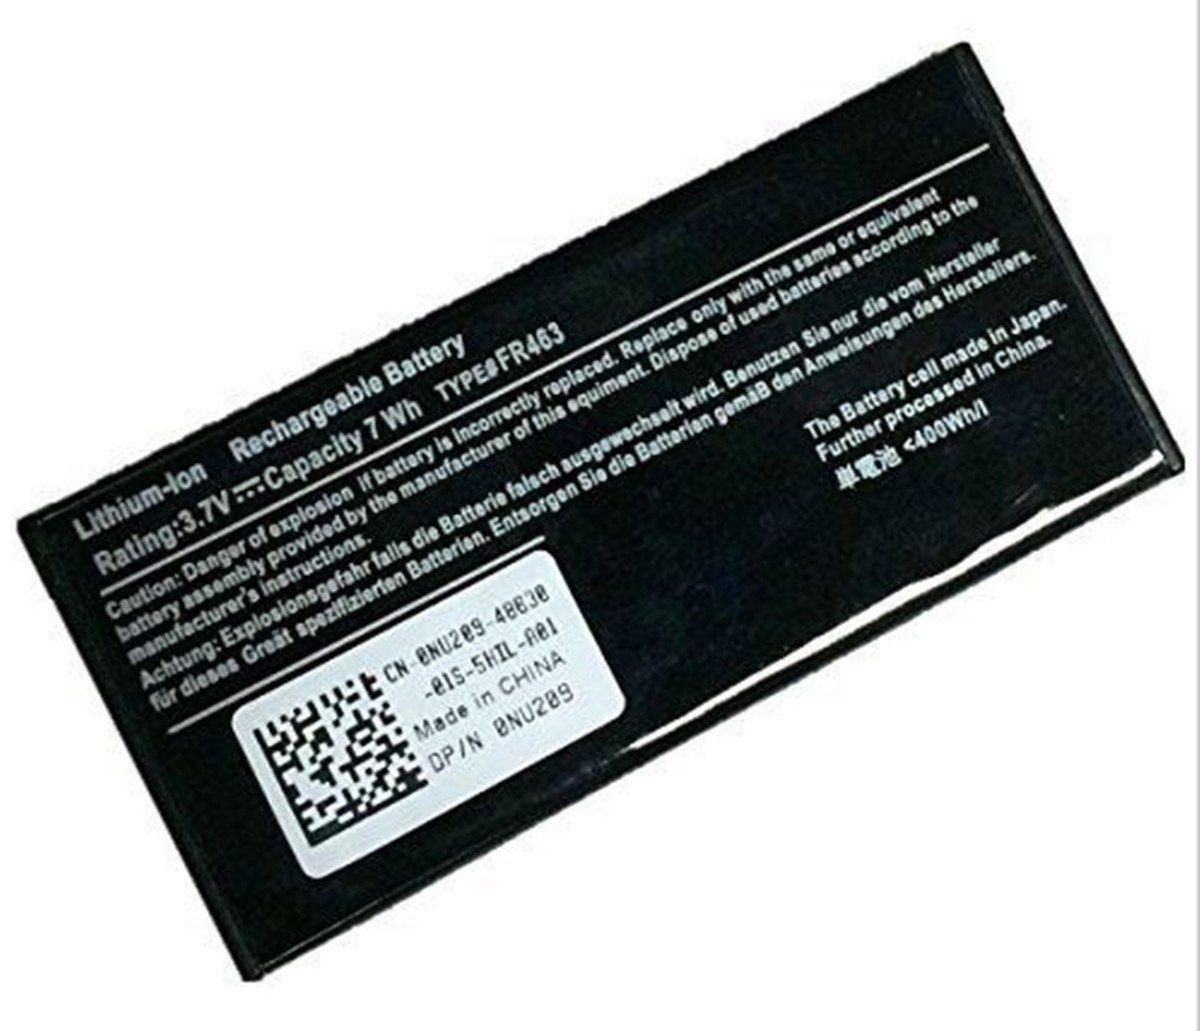 Dell PowerEdge 1900 battery